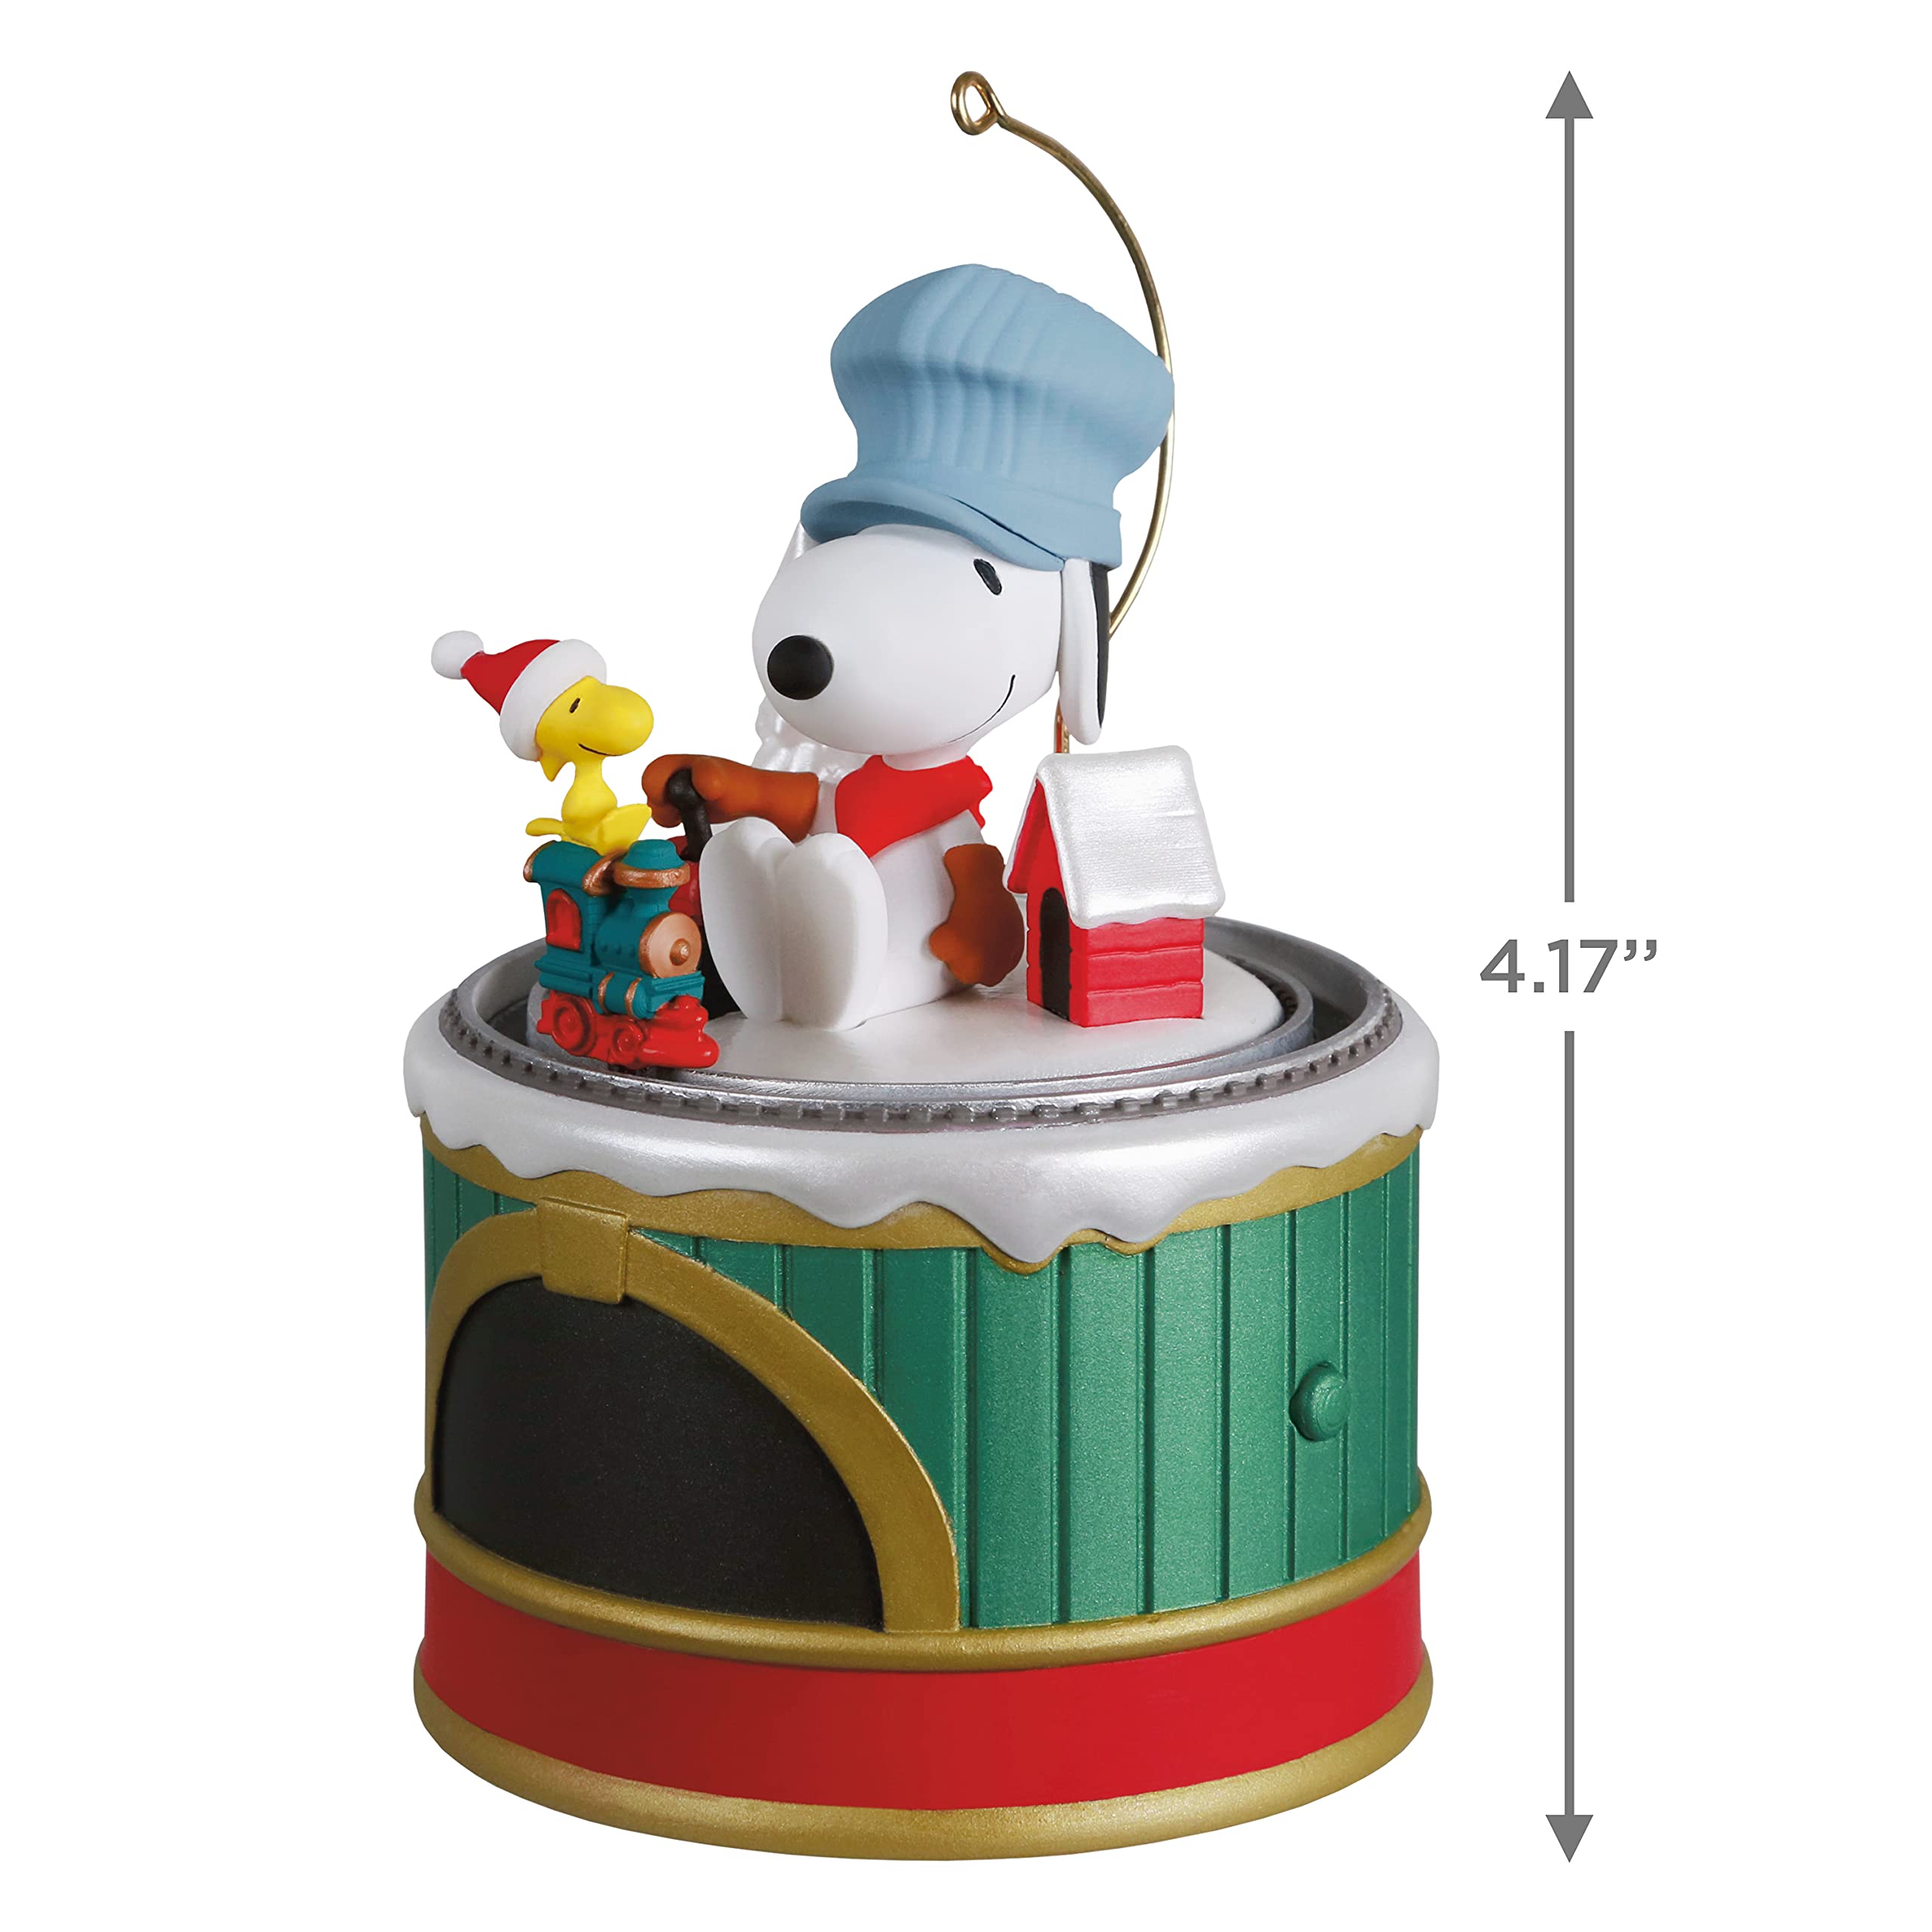 Hallmark Keepsake Christmas Ornament 2021, The Peanuts Gang Snoopy's Toy Train, Sound and Motion